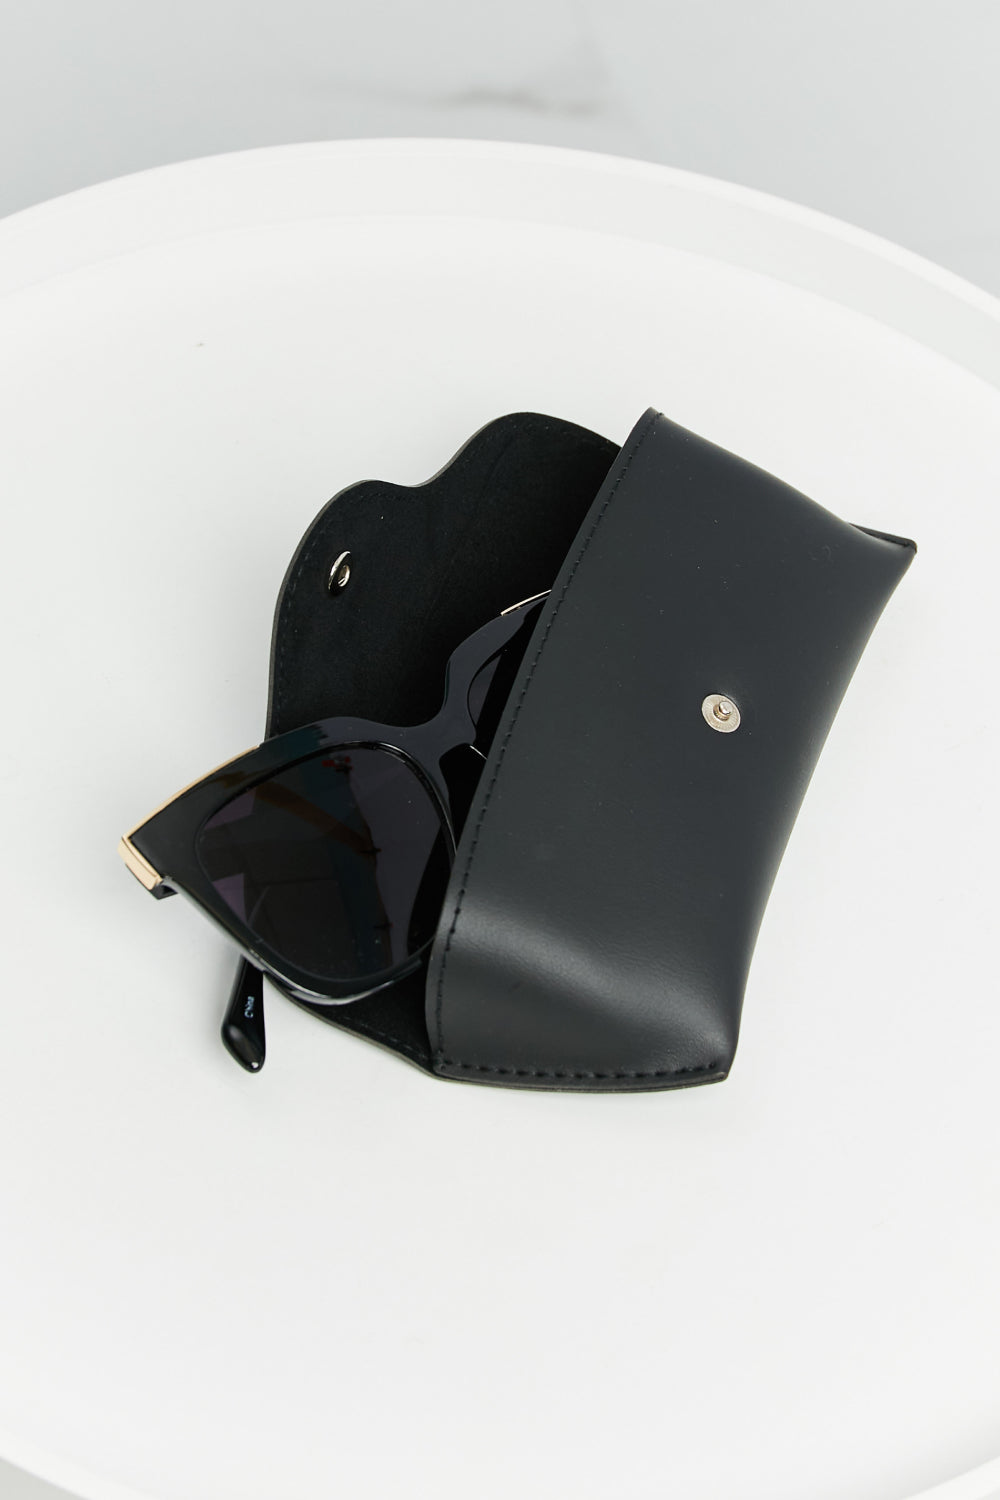 Square TAC Polarization Lens Sunglasses Print on any thing USA/STOD clothes